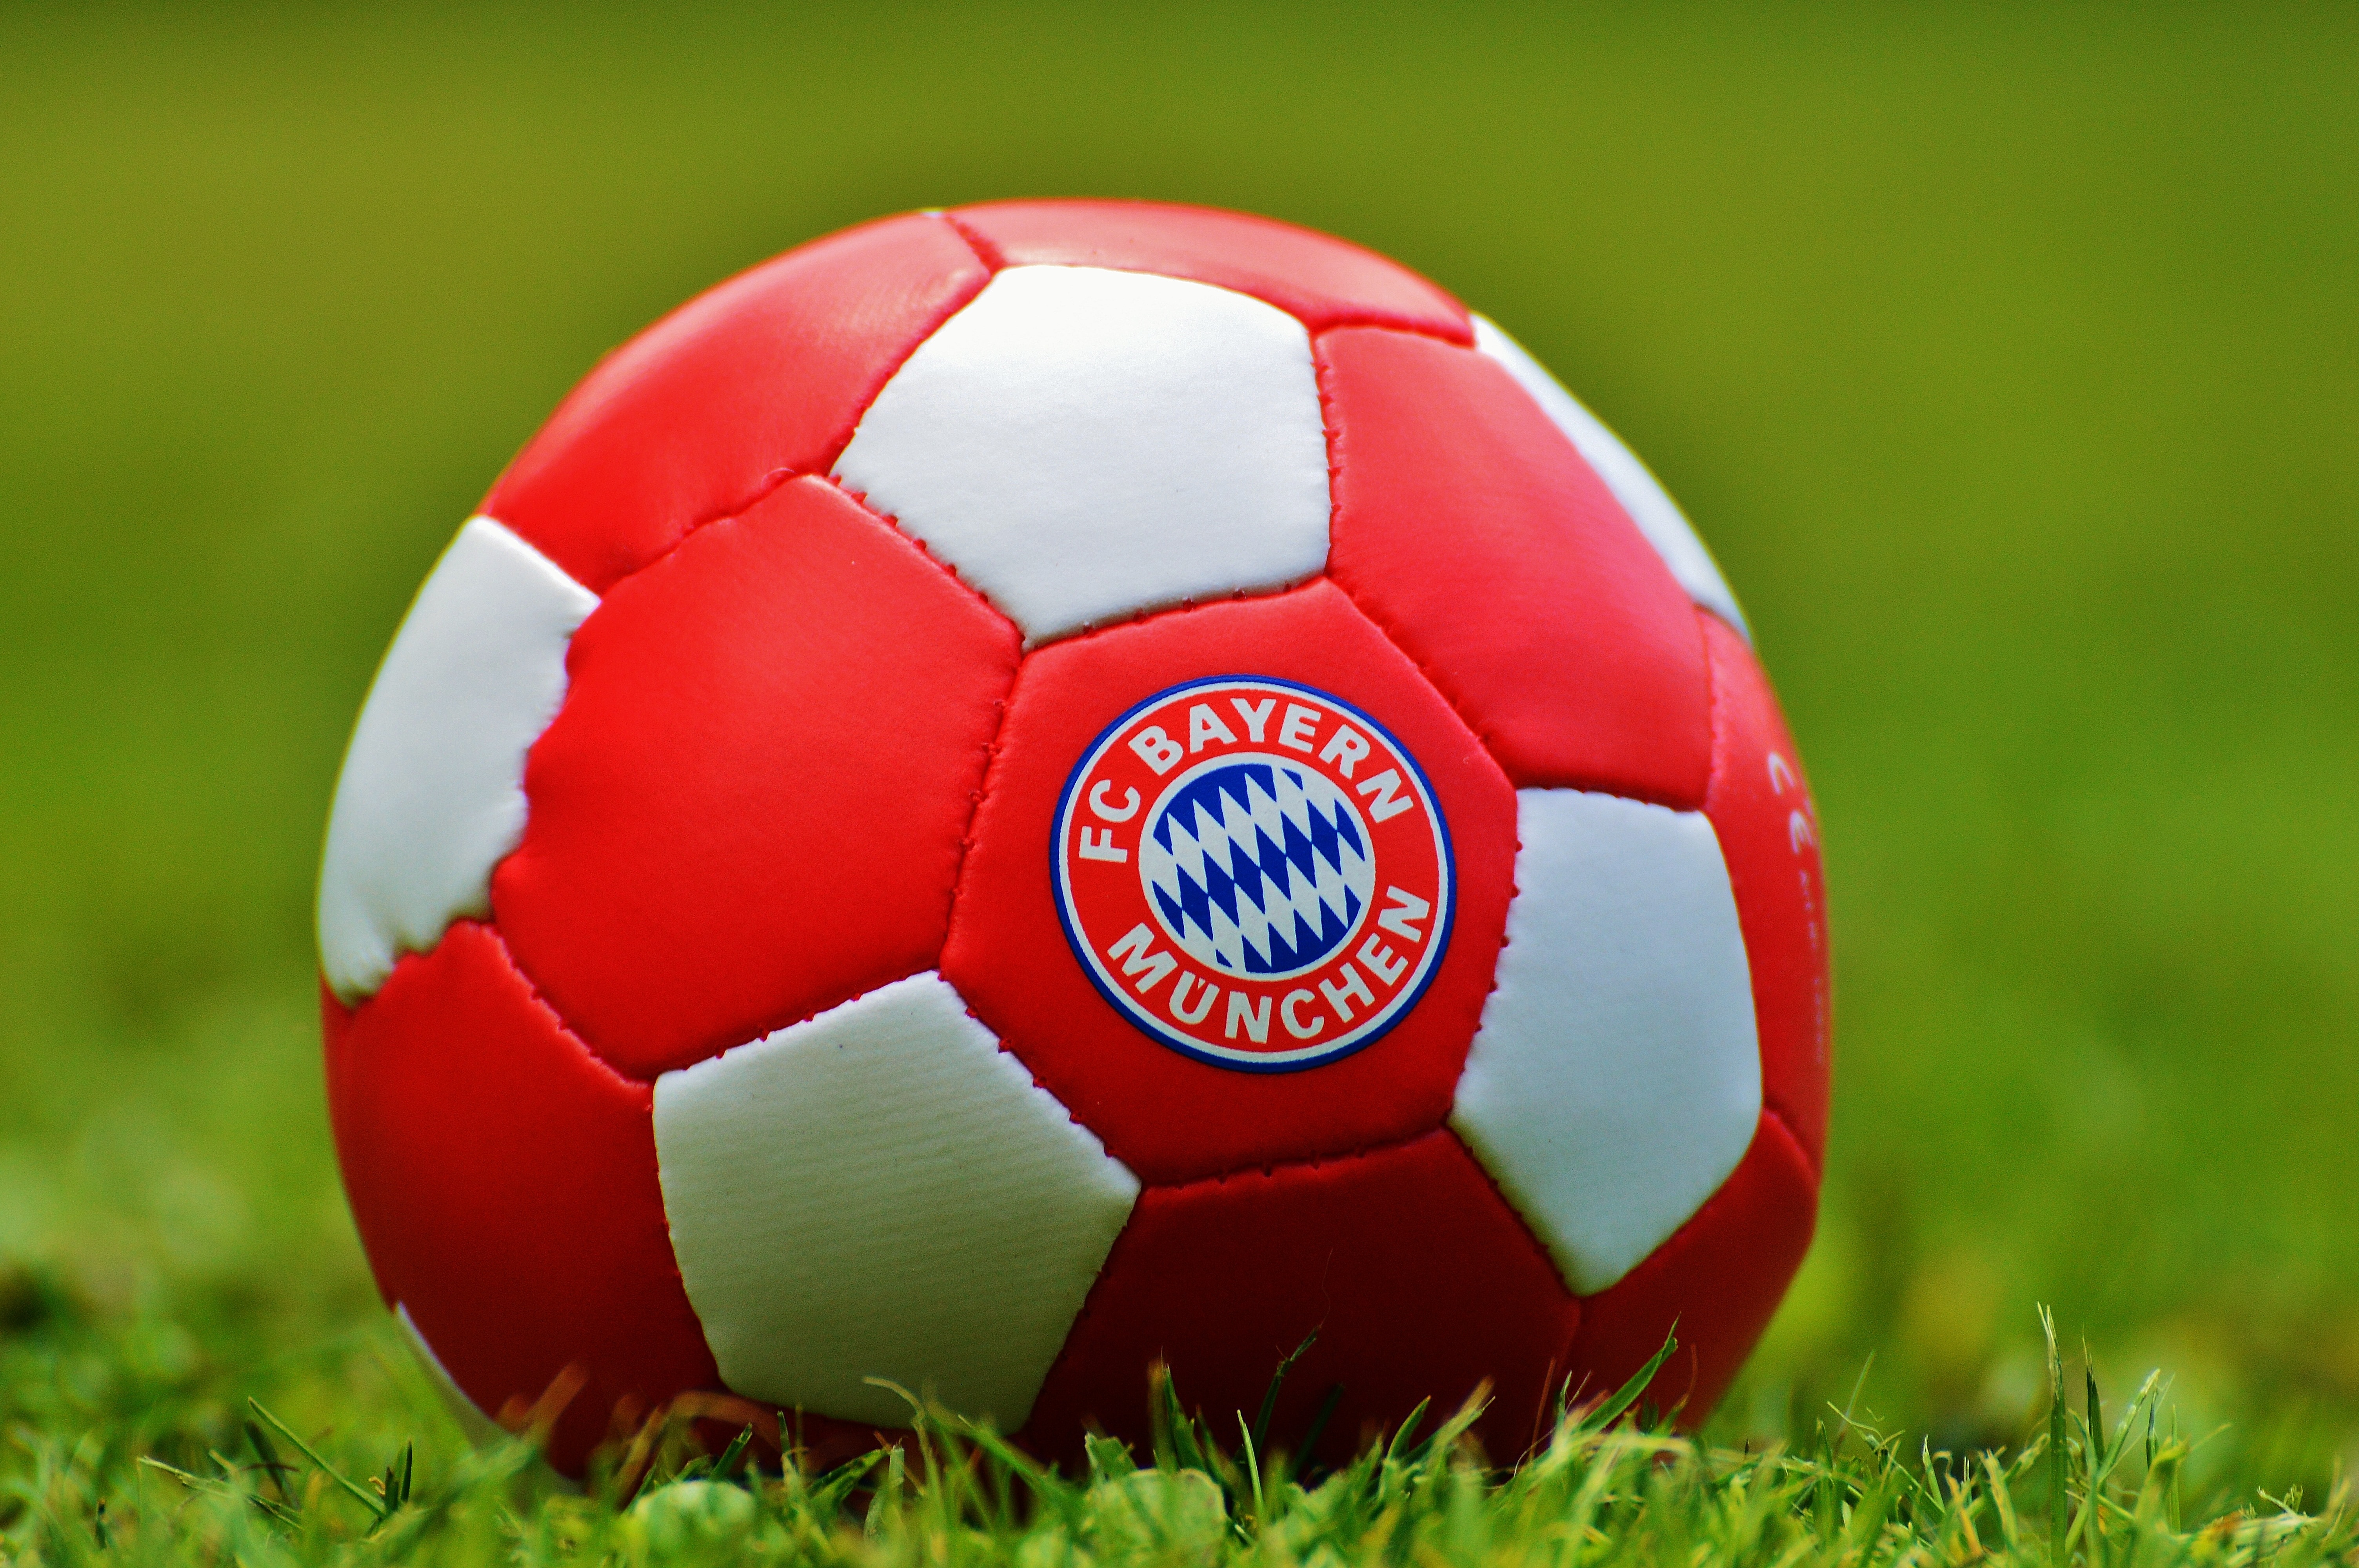 Bavaria, Football Club, Bayern Munich, grass, sport